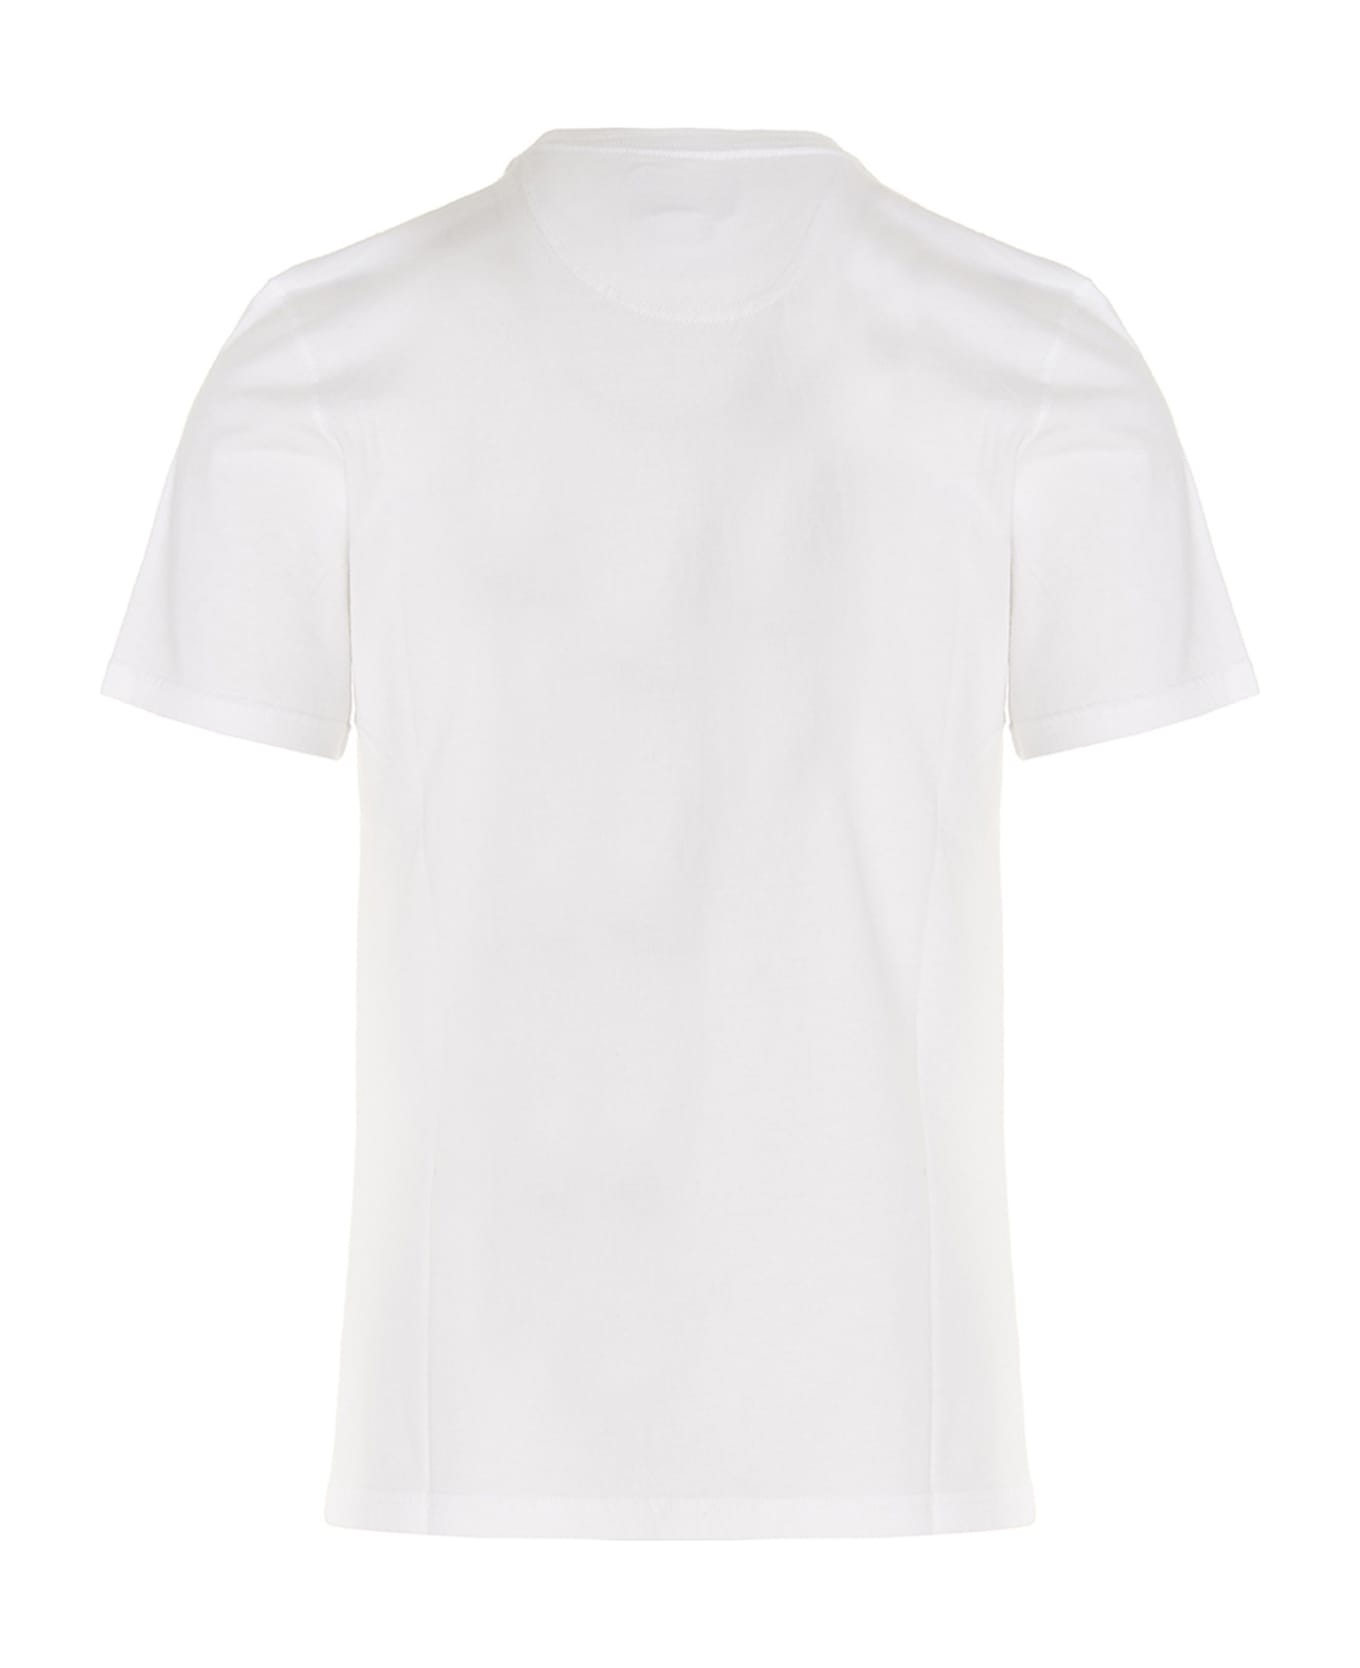 Barbour T-shirt 'small Logo' - White シャツ